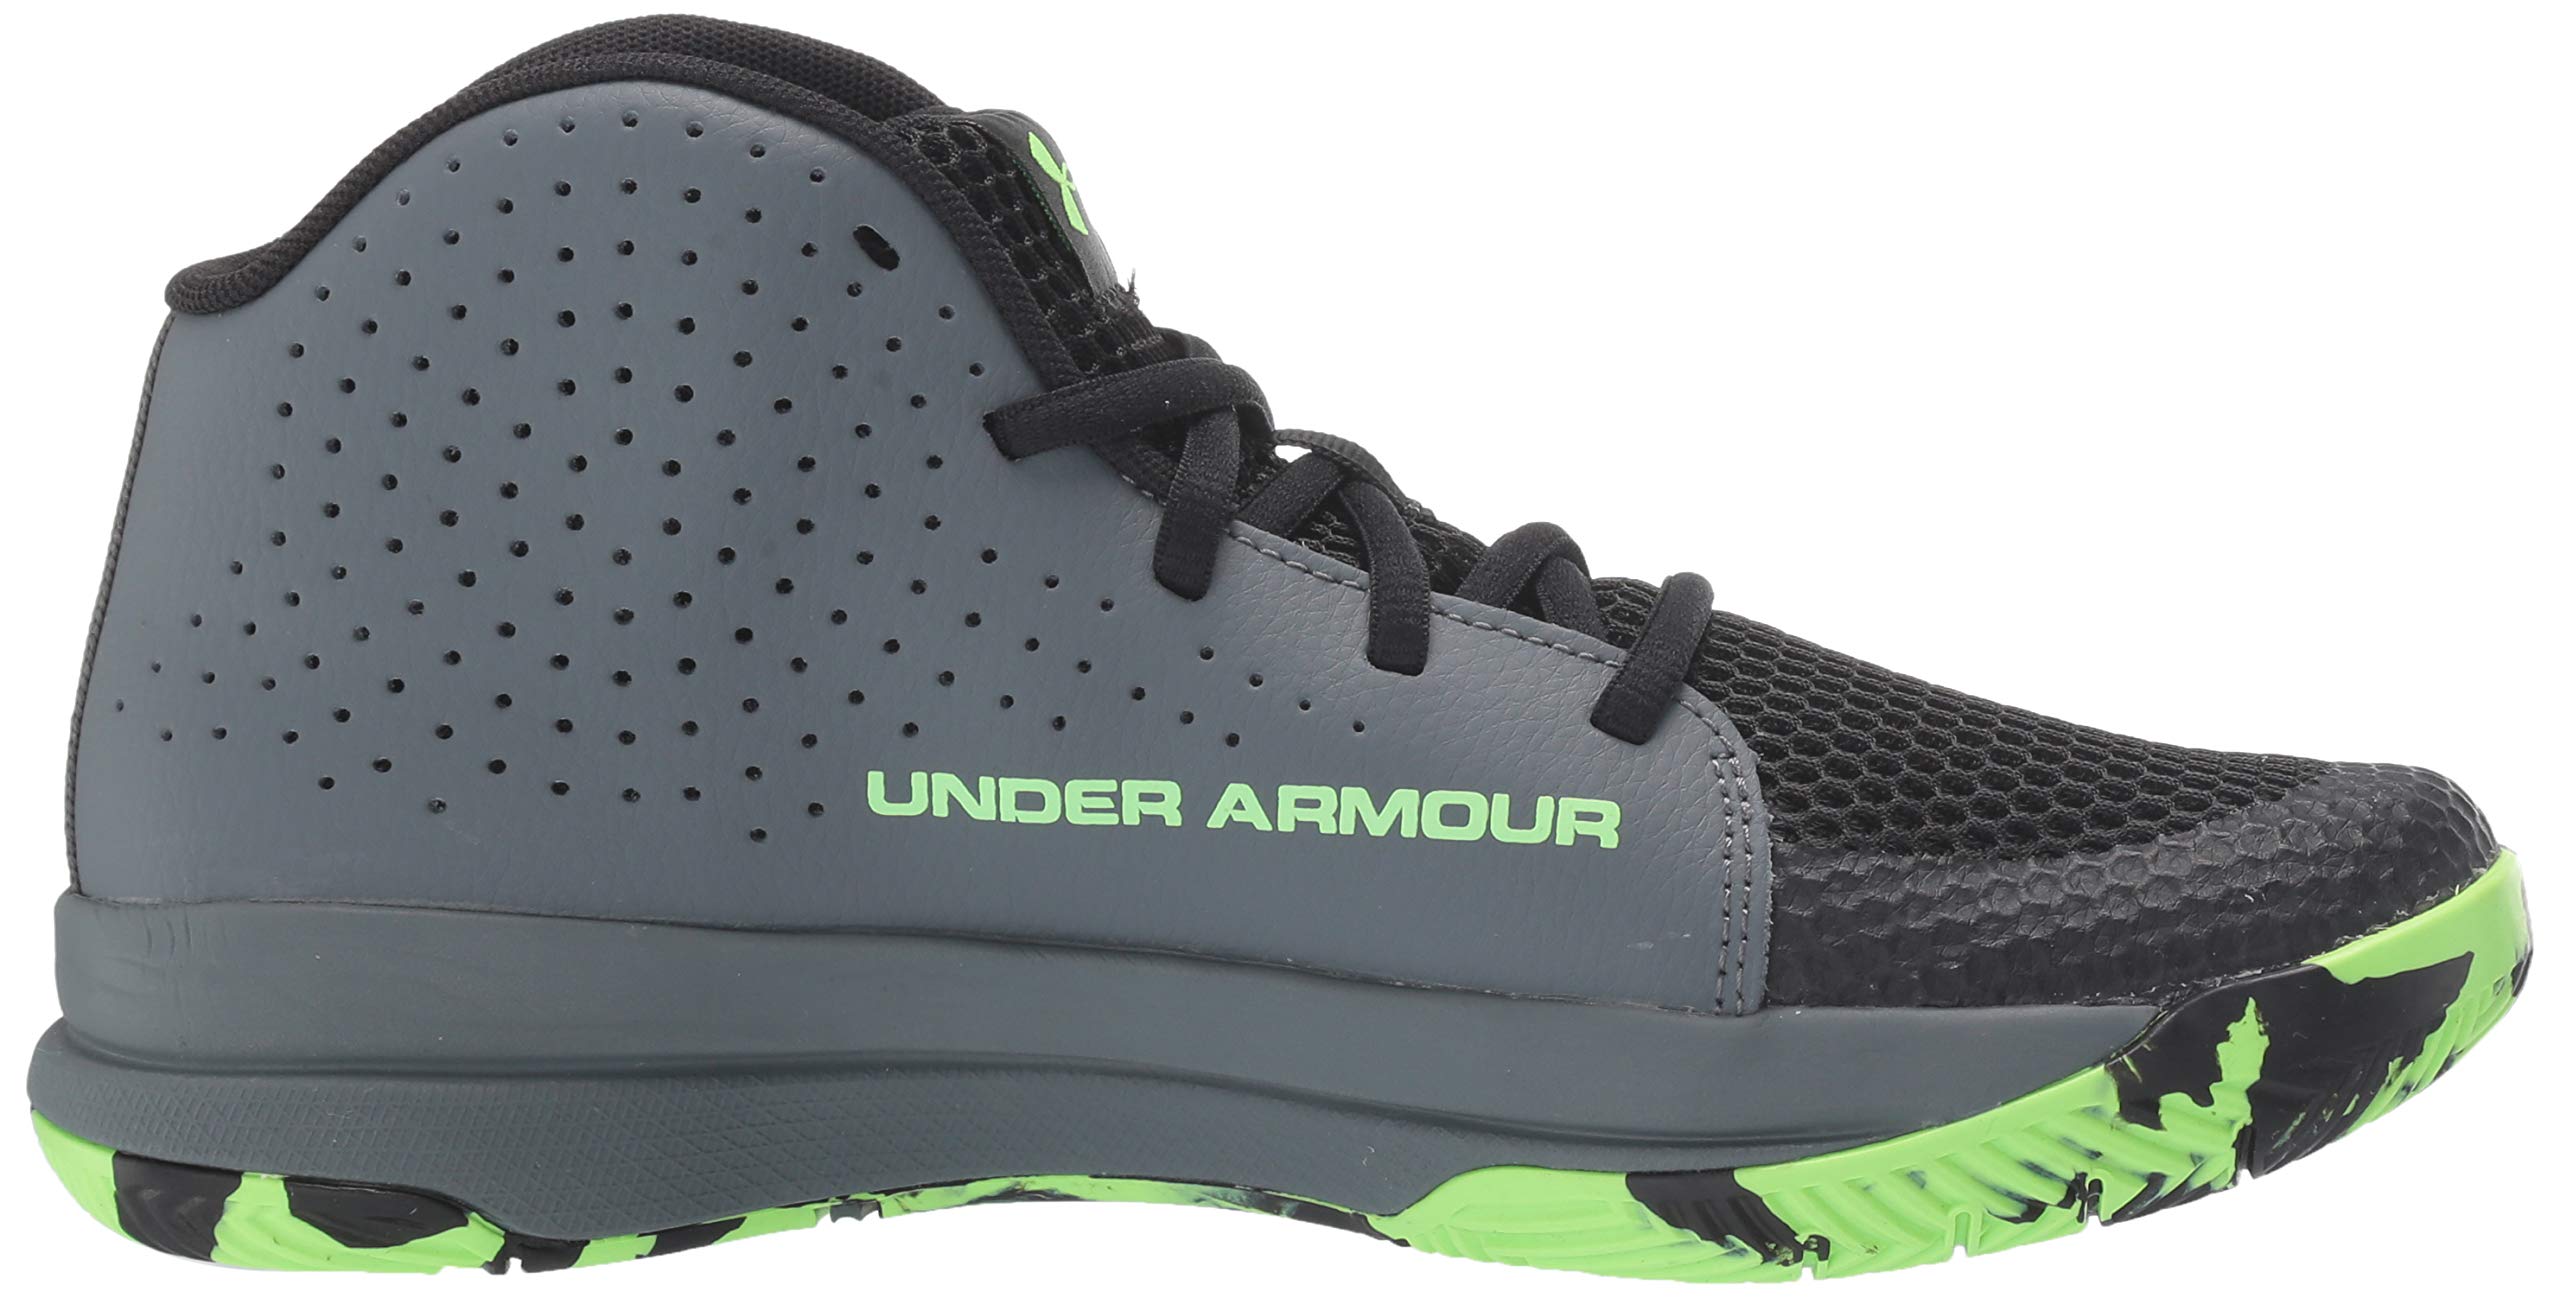 Under Armour Unisex-Child Grade School Jet 2019 Basketball Shoe, Pitch Gray (100)/Black, 7